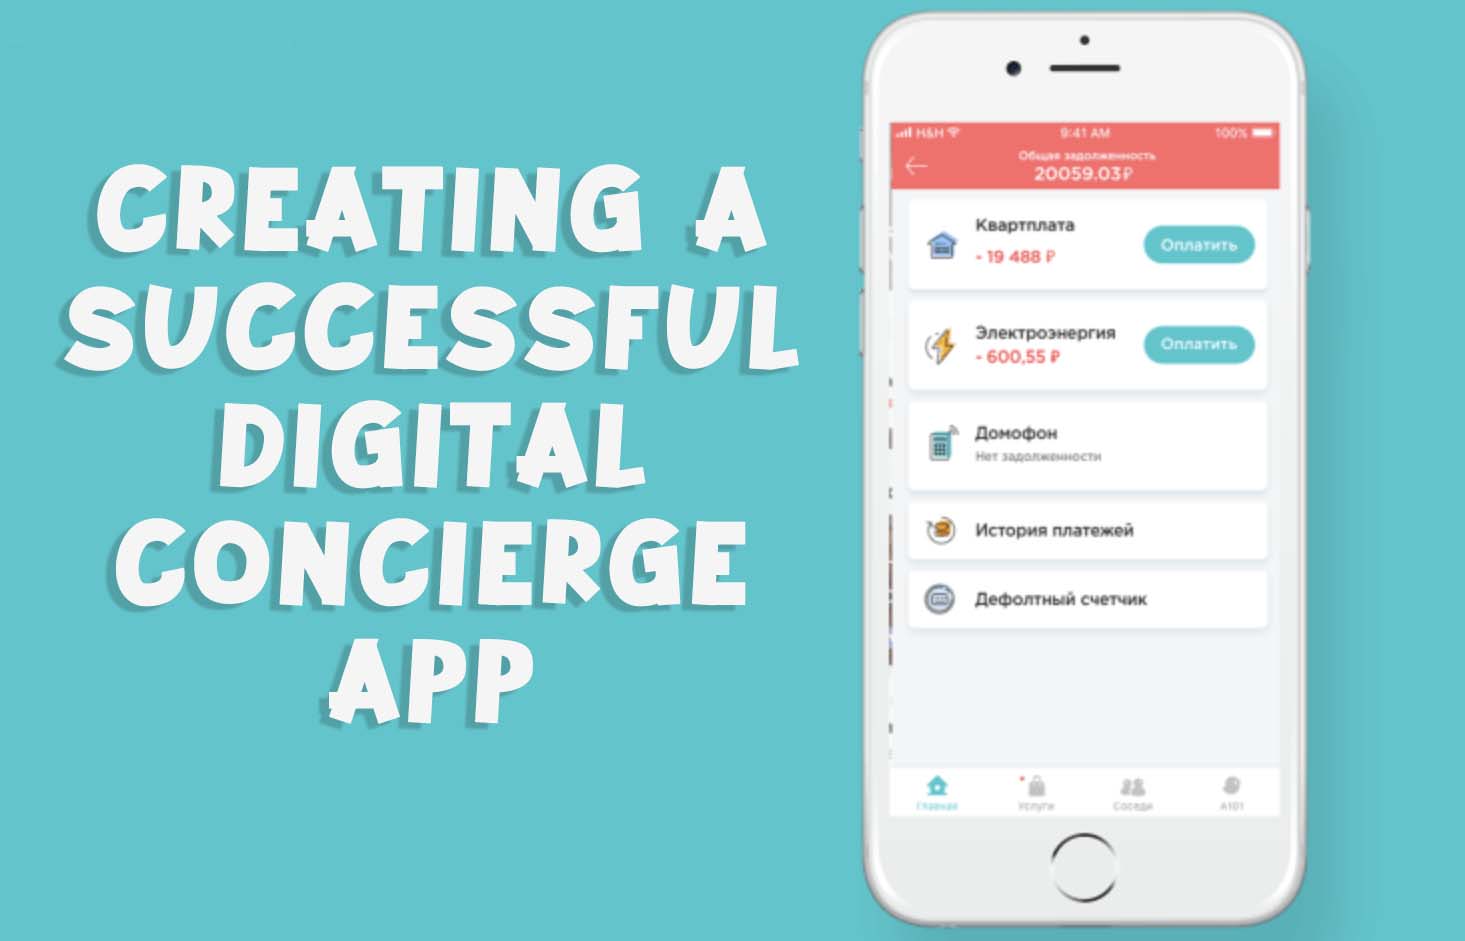 Creating a Successful Digital Concierge App